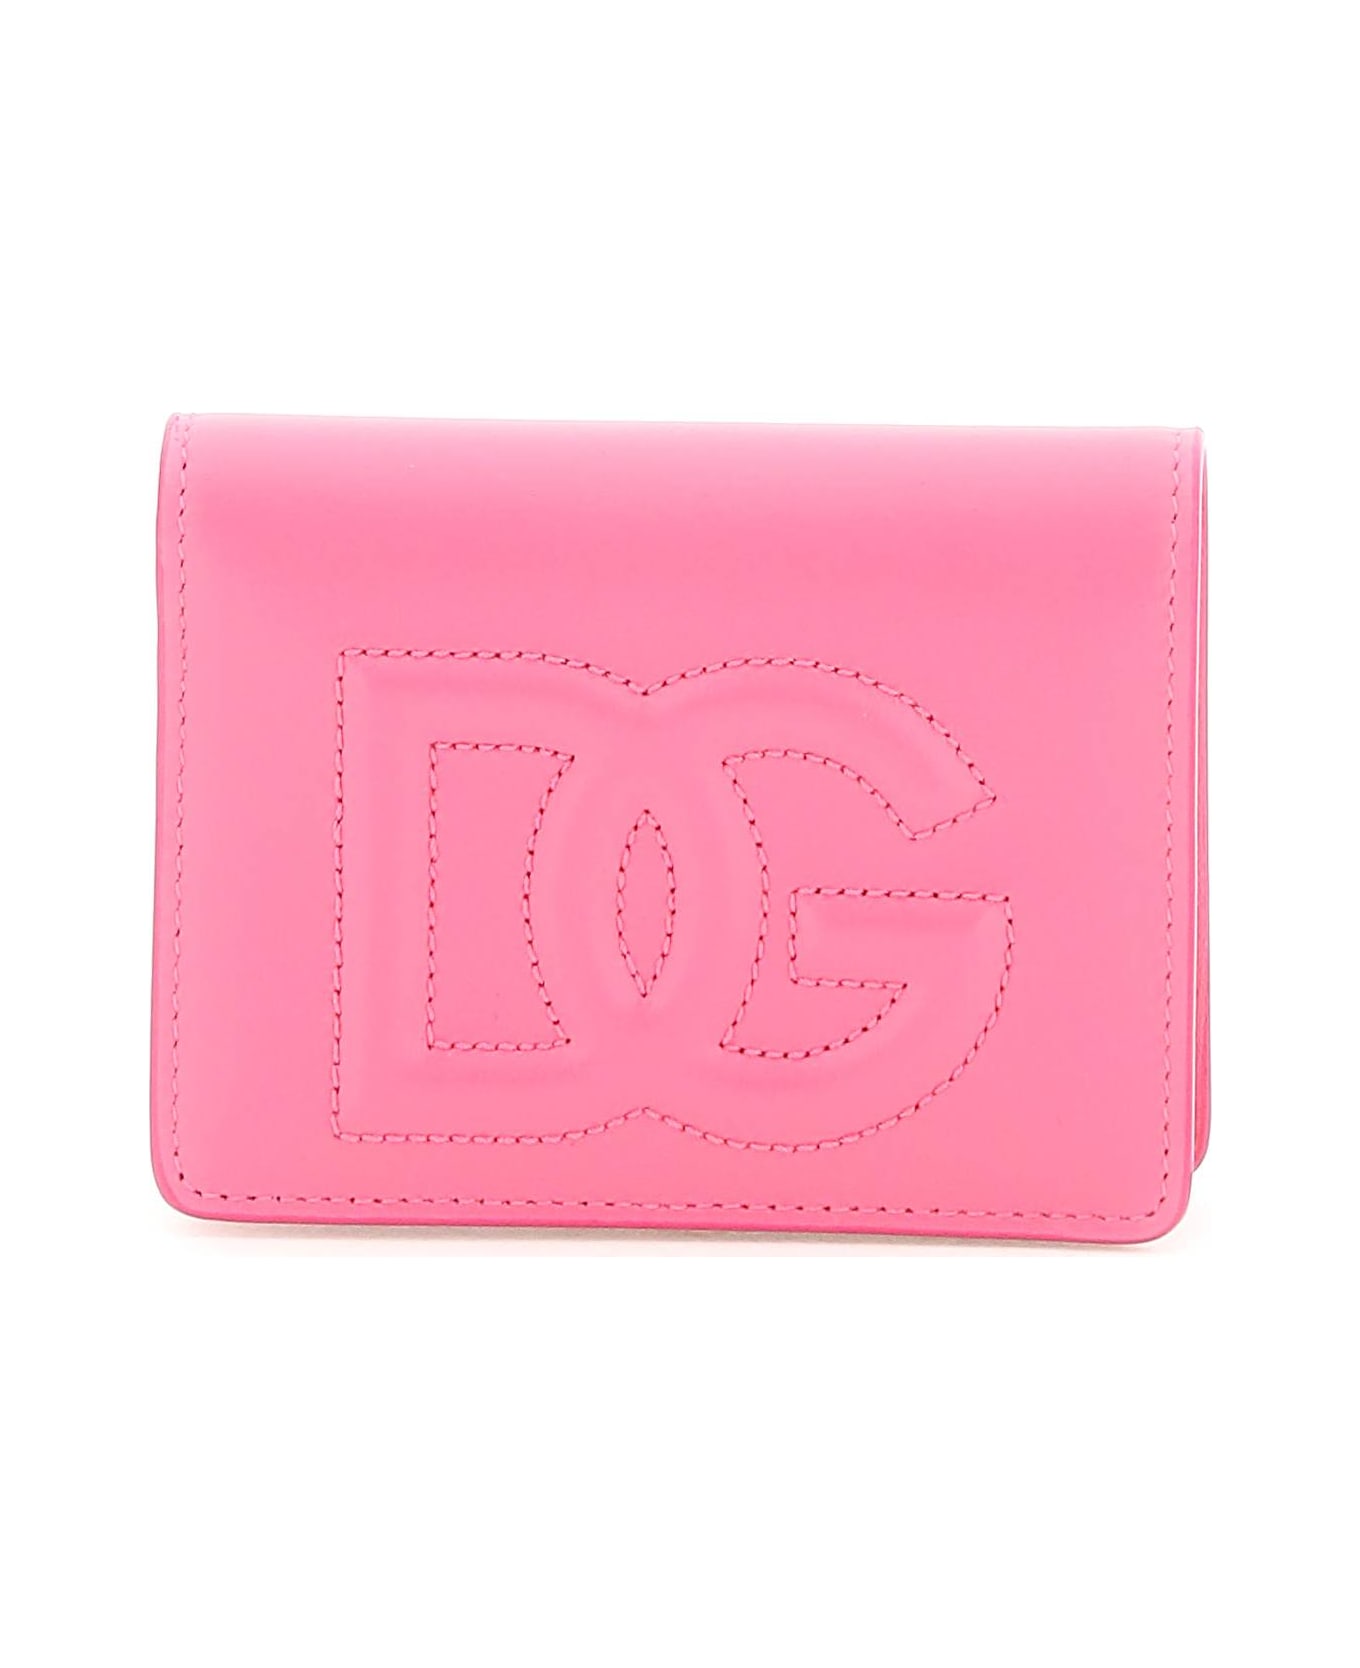 Dolce & Gabbana Leather Wallet - Fuchsia 財布